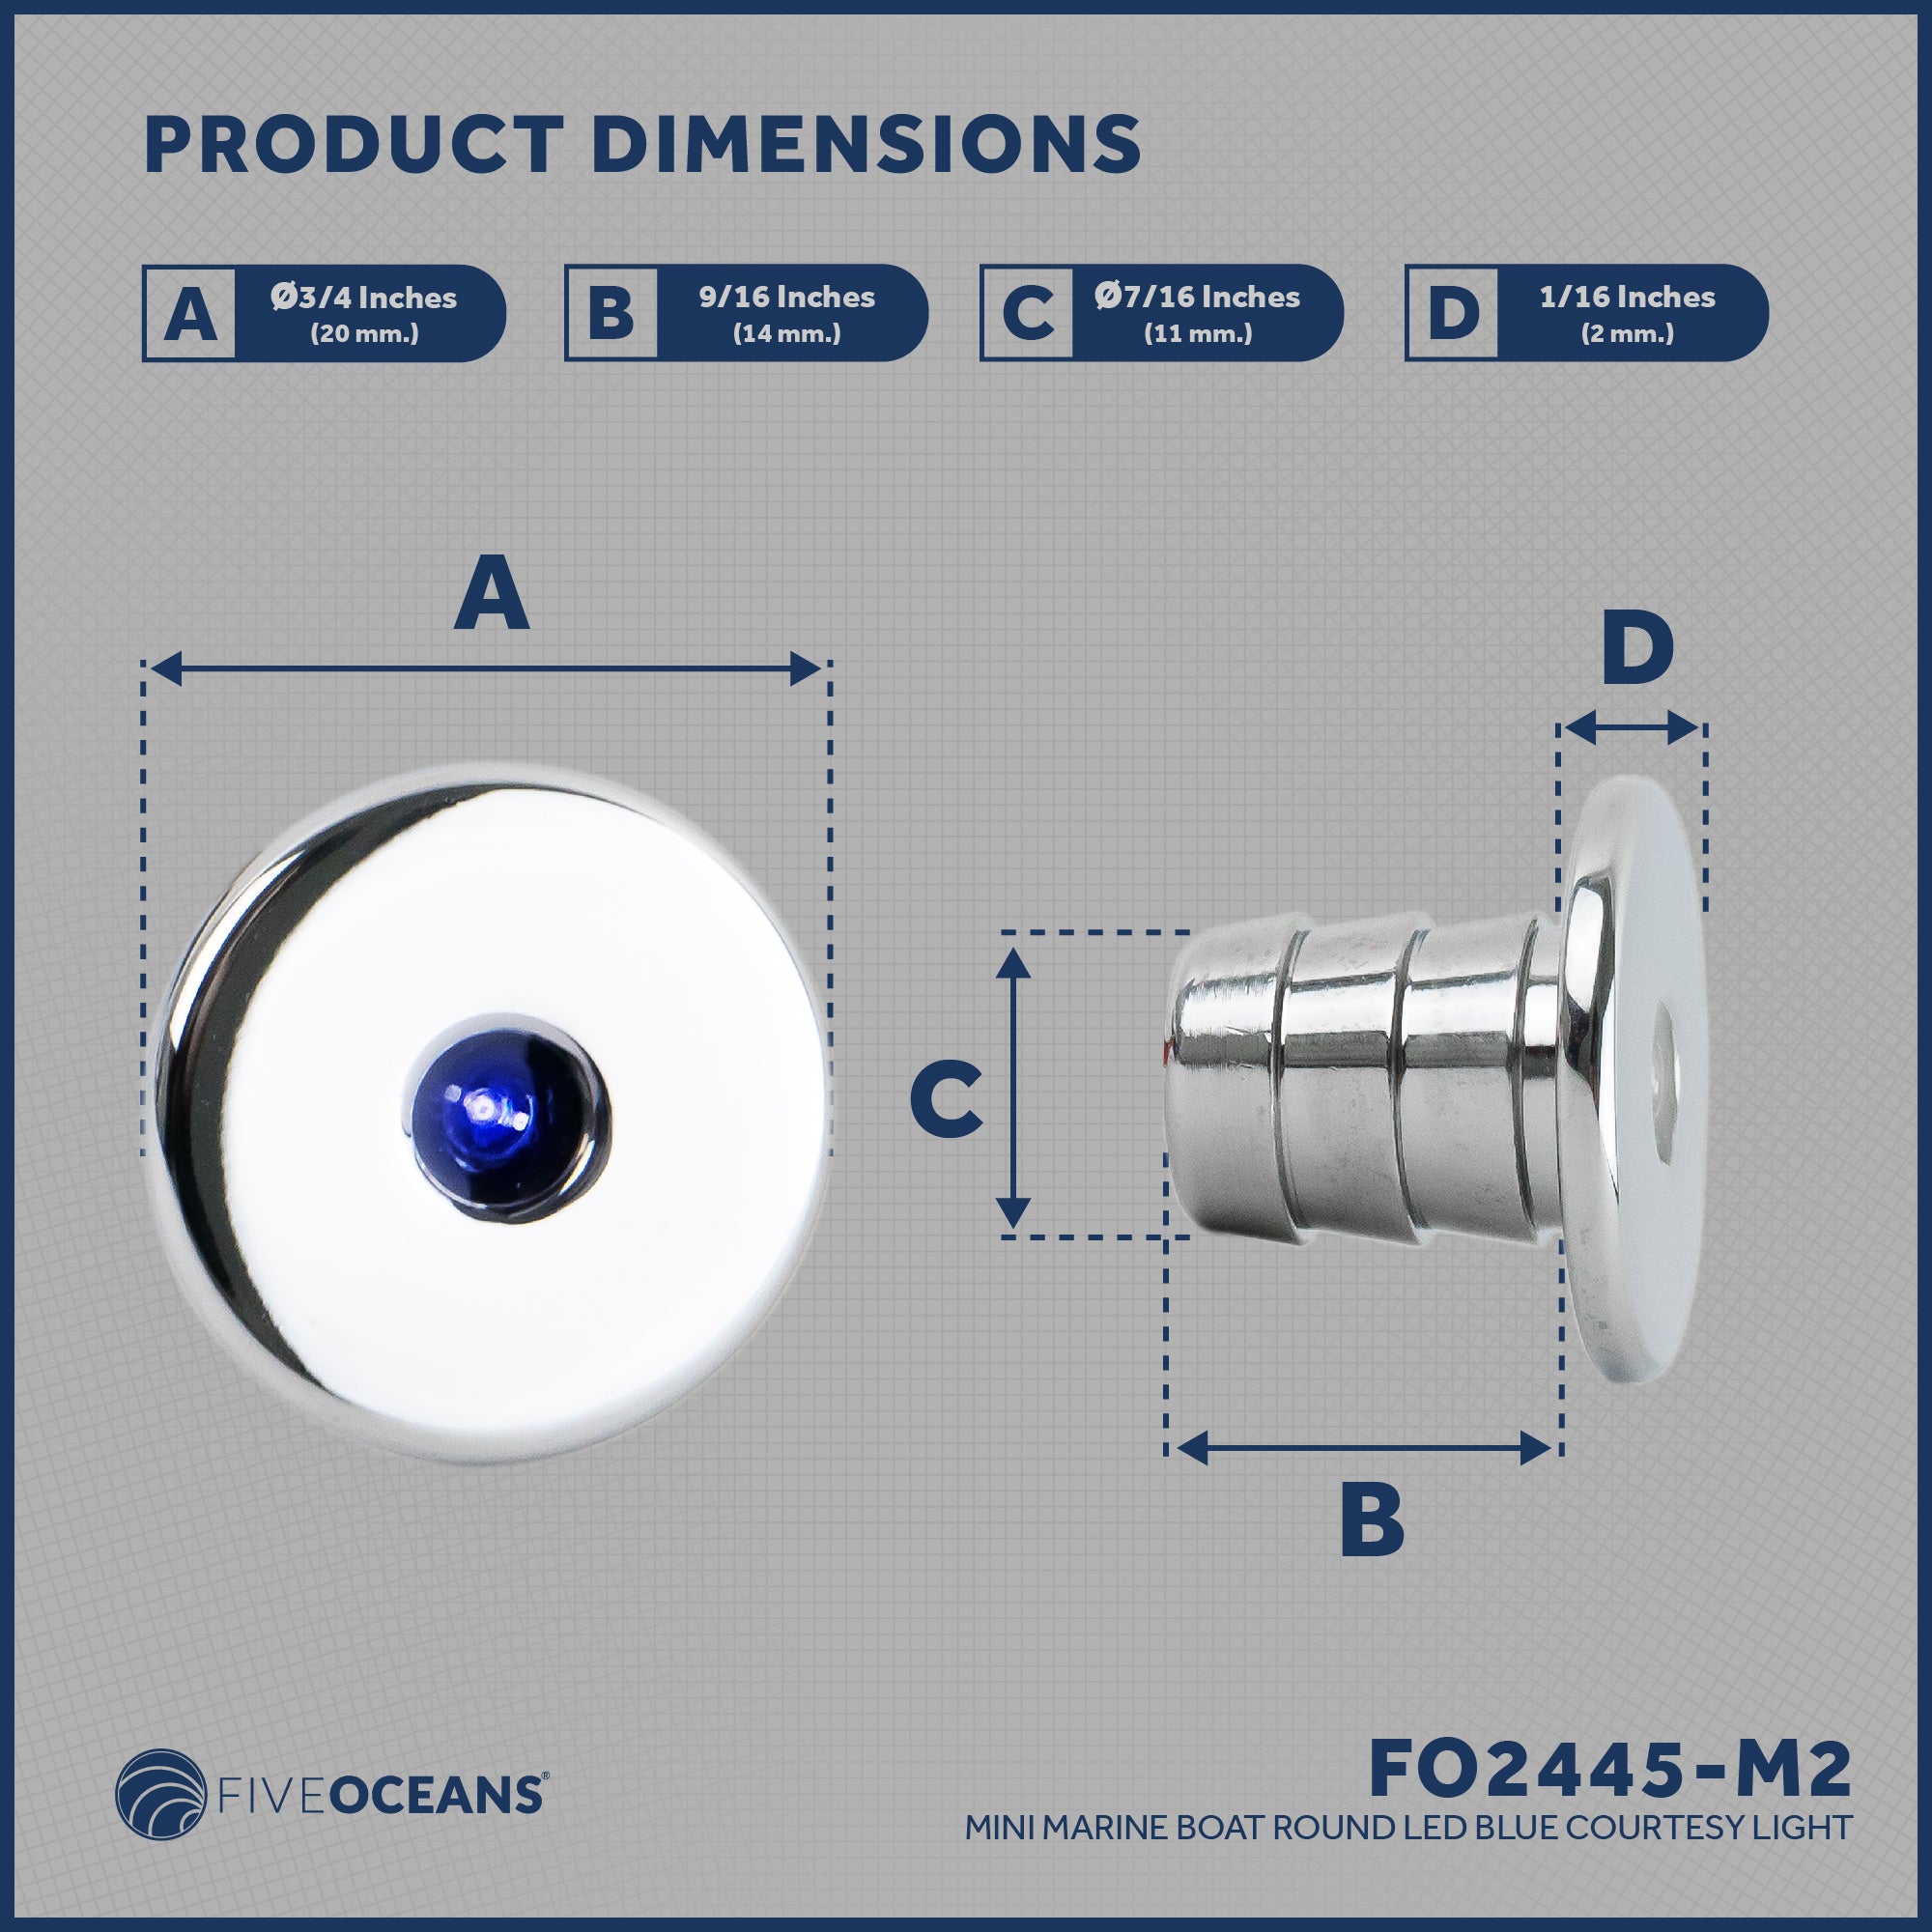 LED Courtesy Mini Accent Light, Blue 2-Pack - FO-2445-M2